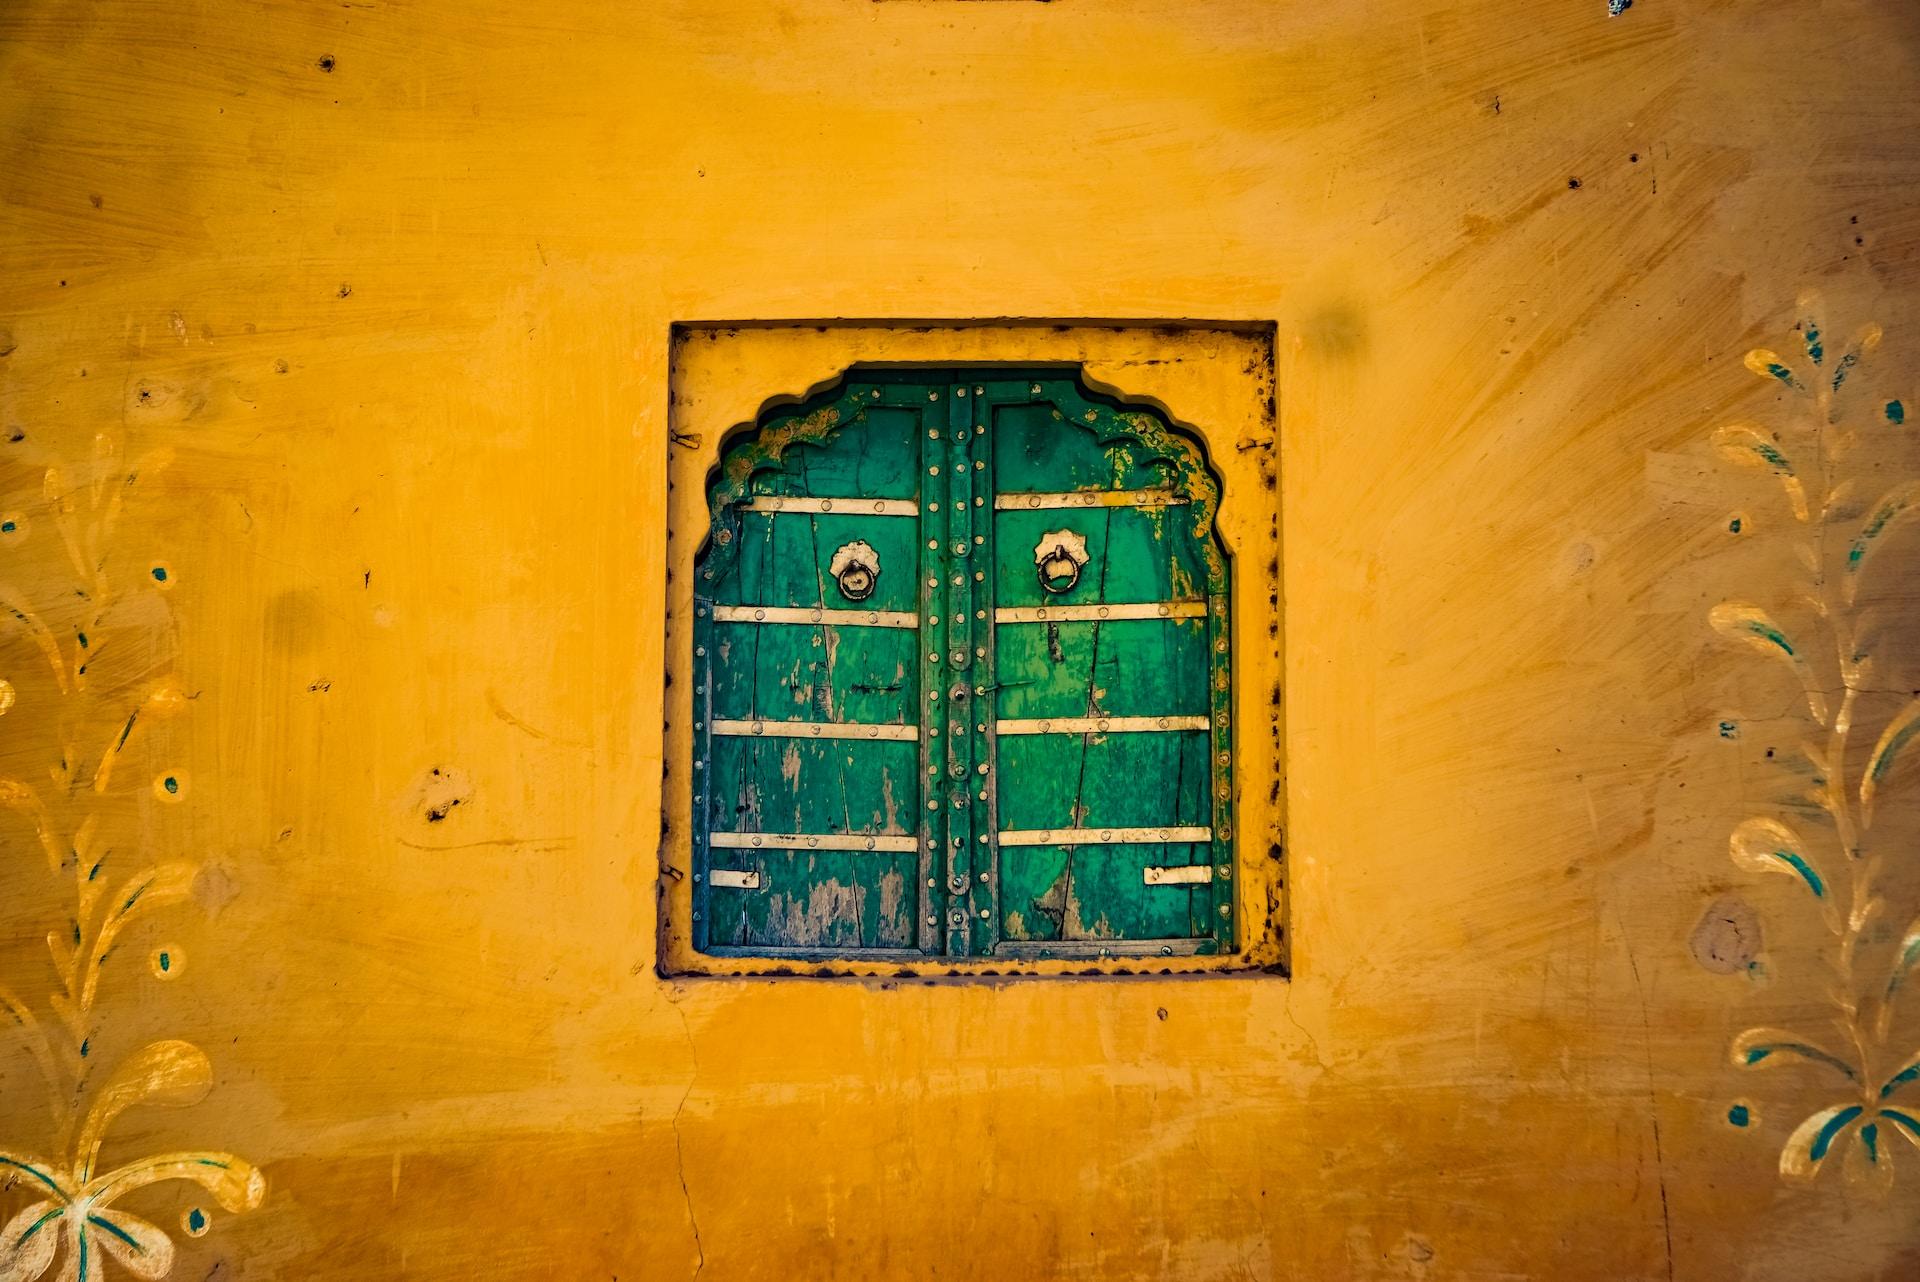 green window in traditional Indian dwellings